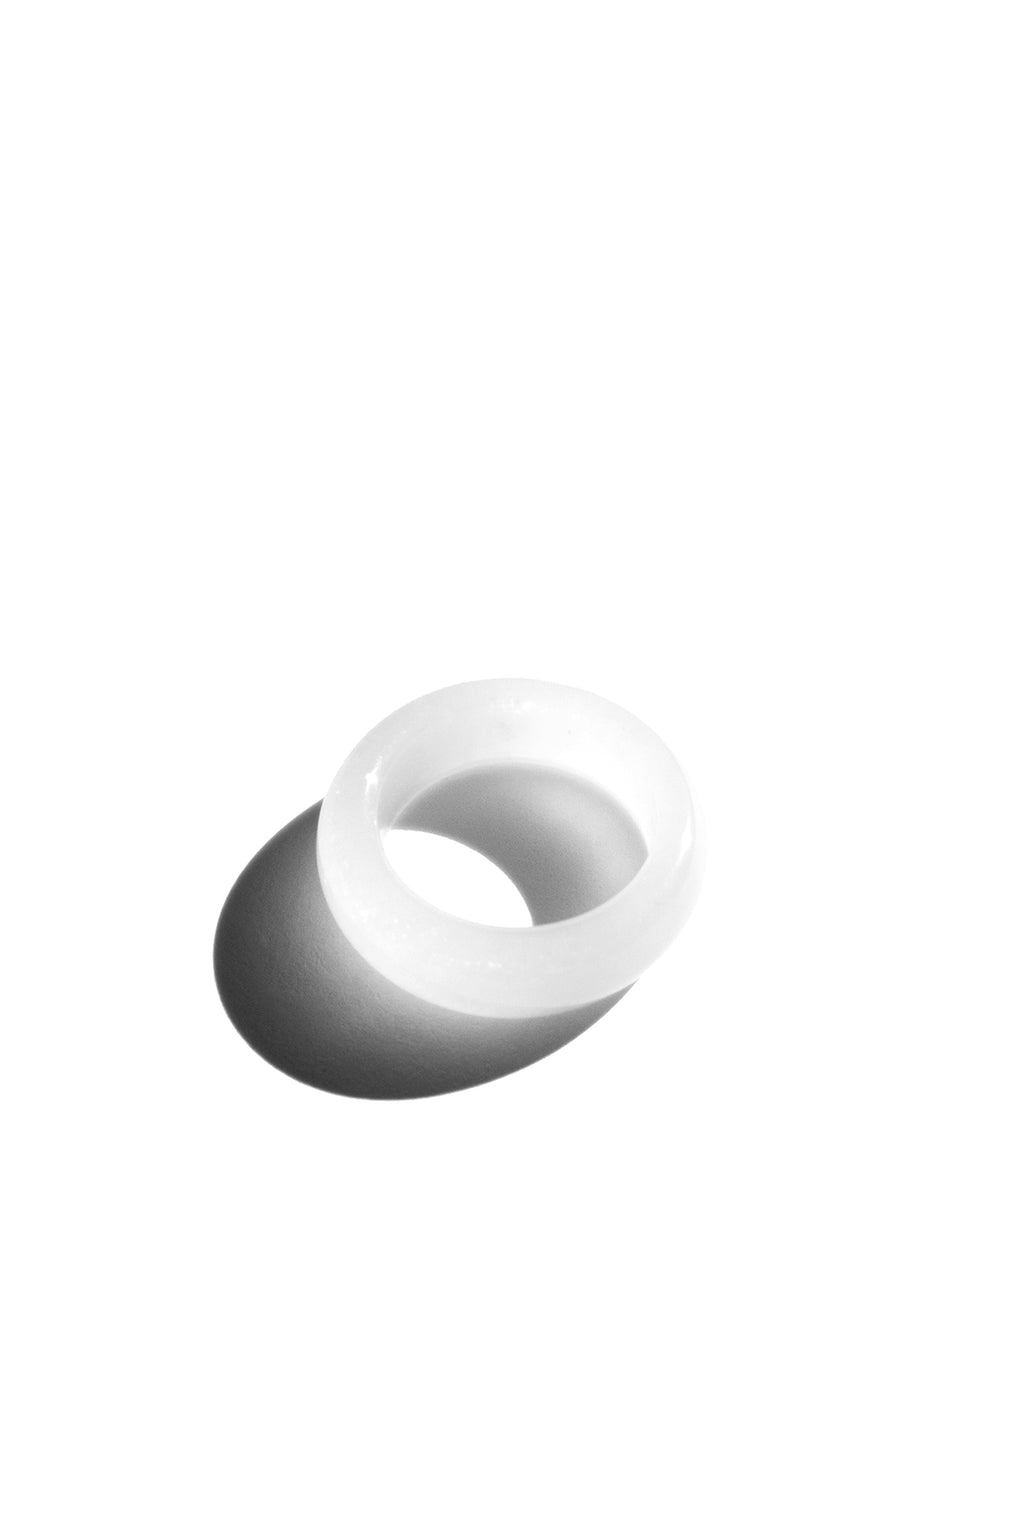 tee-white-jade-ring-seree-1